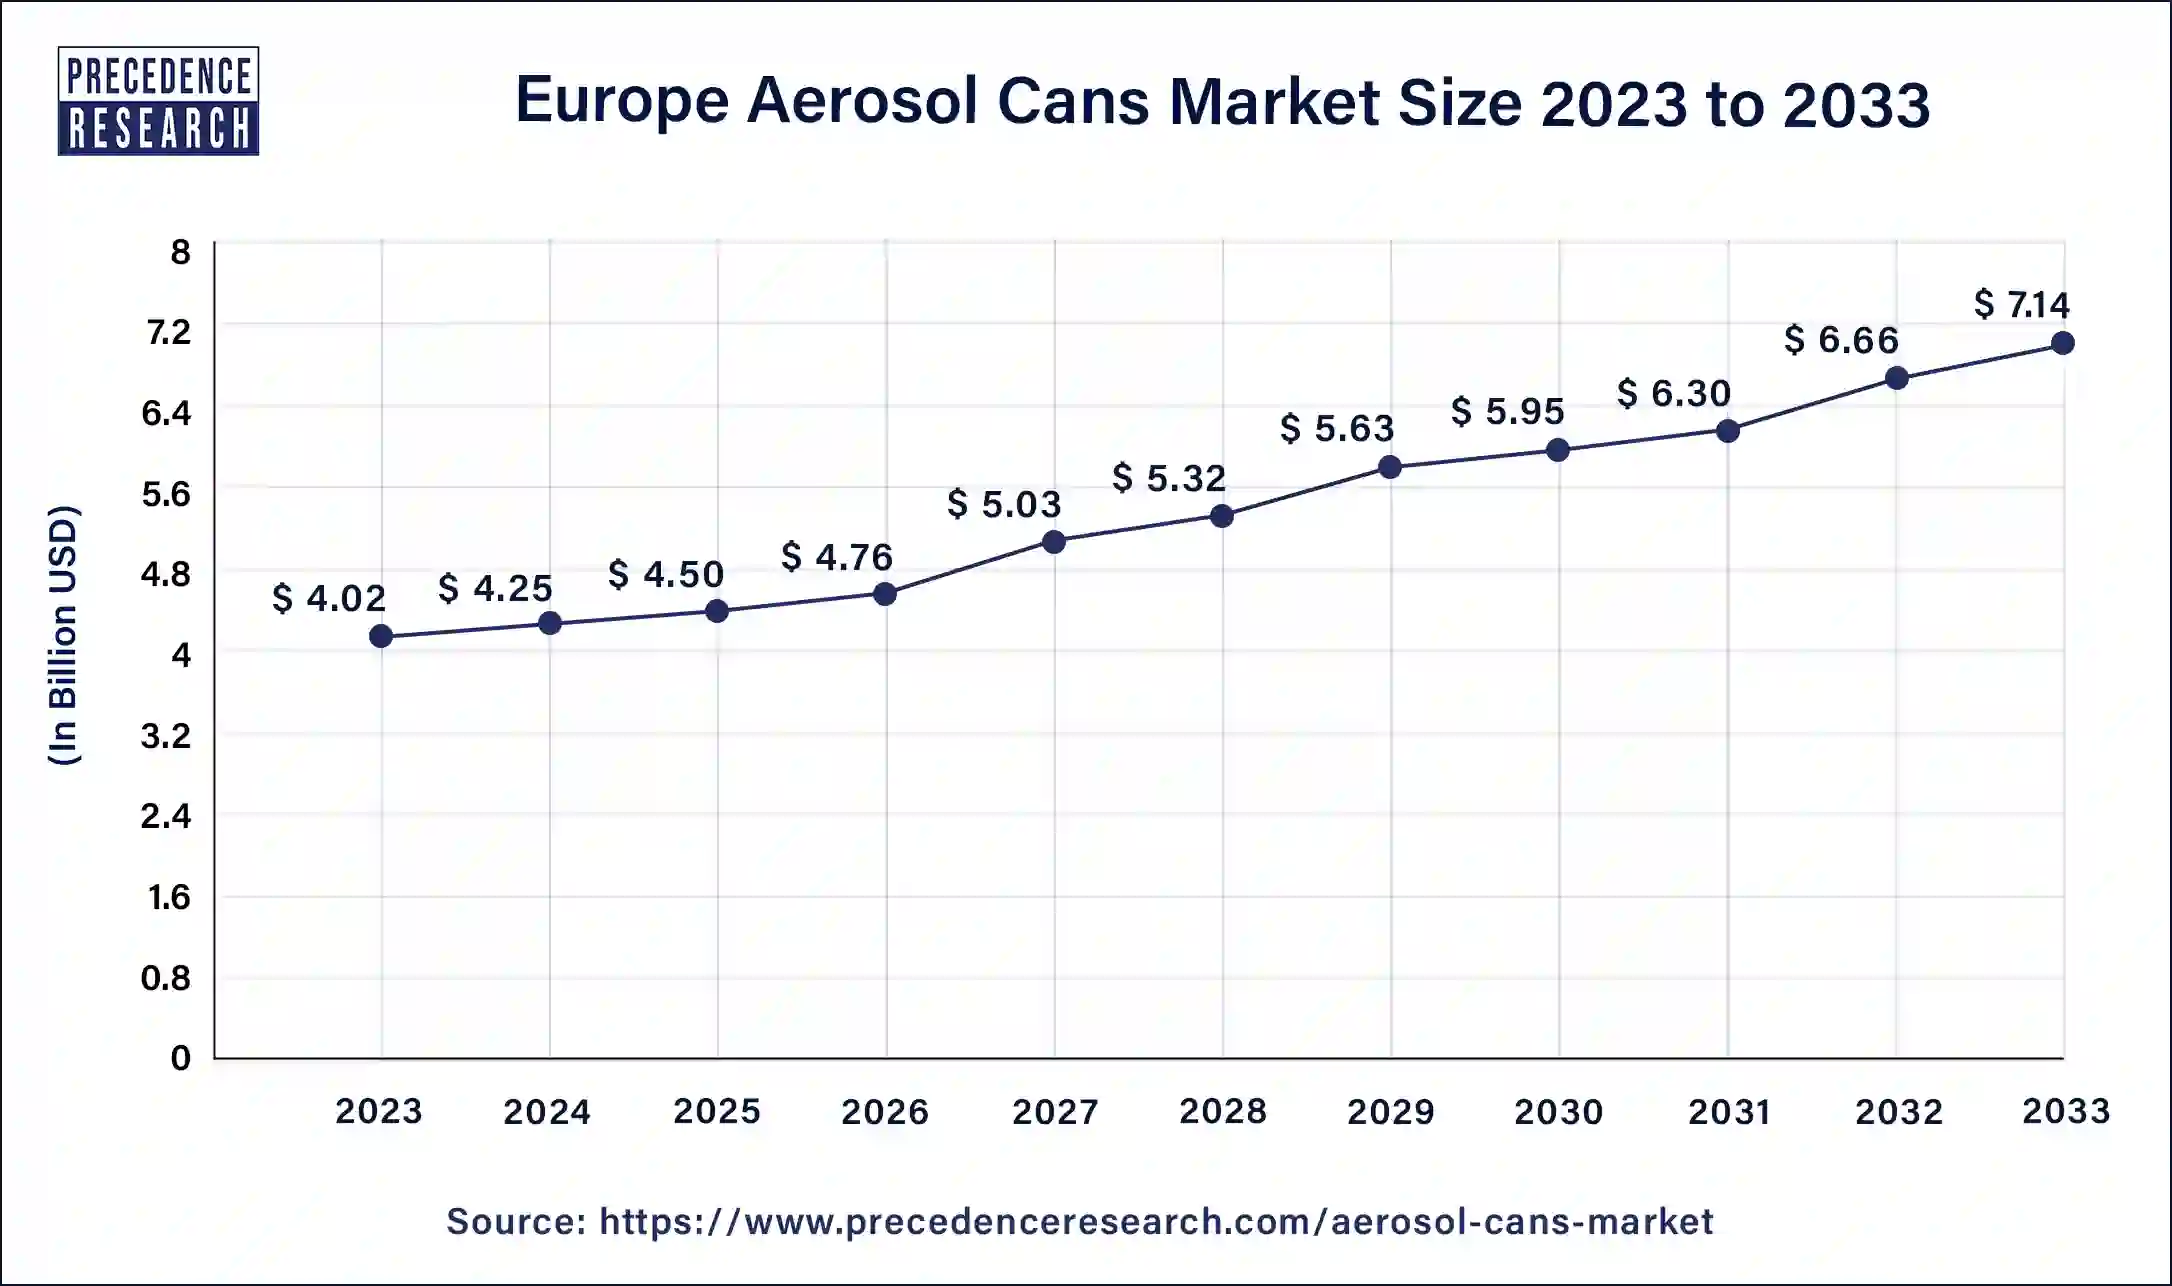 Europe Aerosol Cans Market Size 2024 to 2033